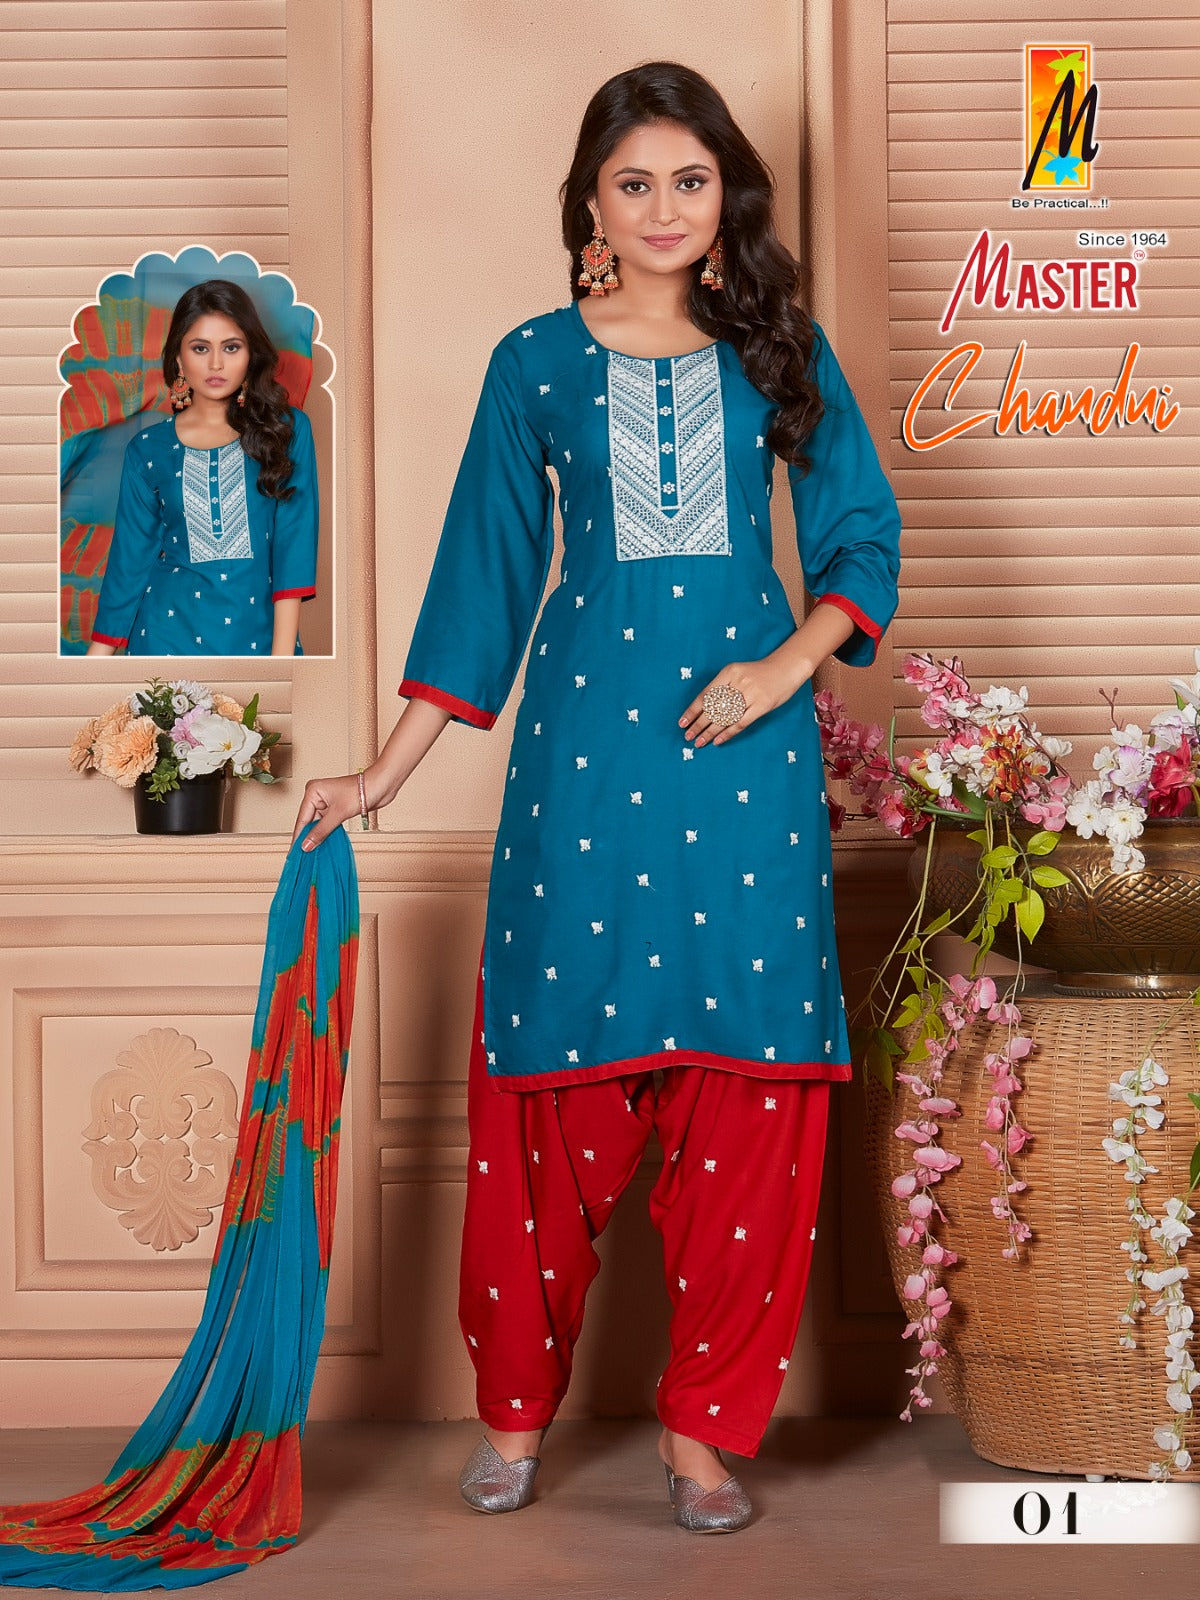 Chandni Master Rayon Readymade Patiyala Suits